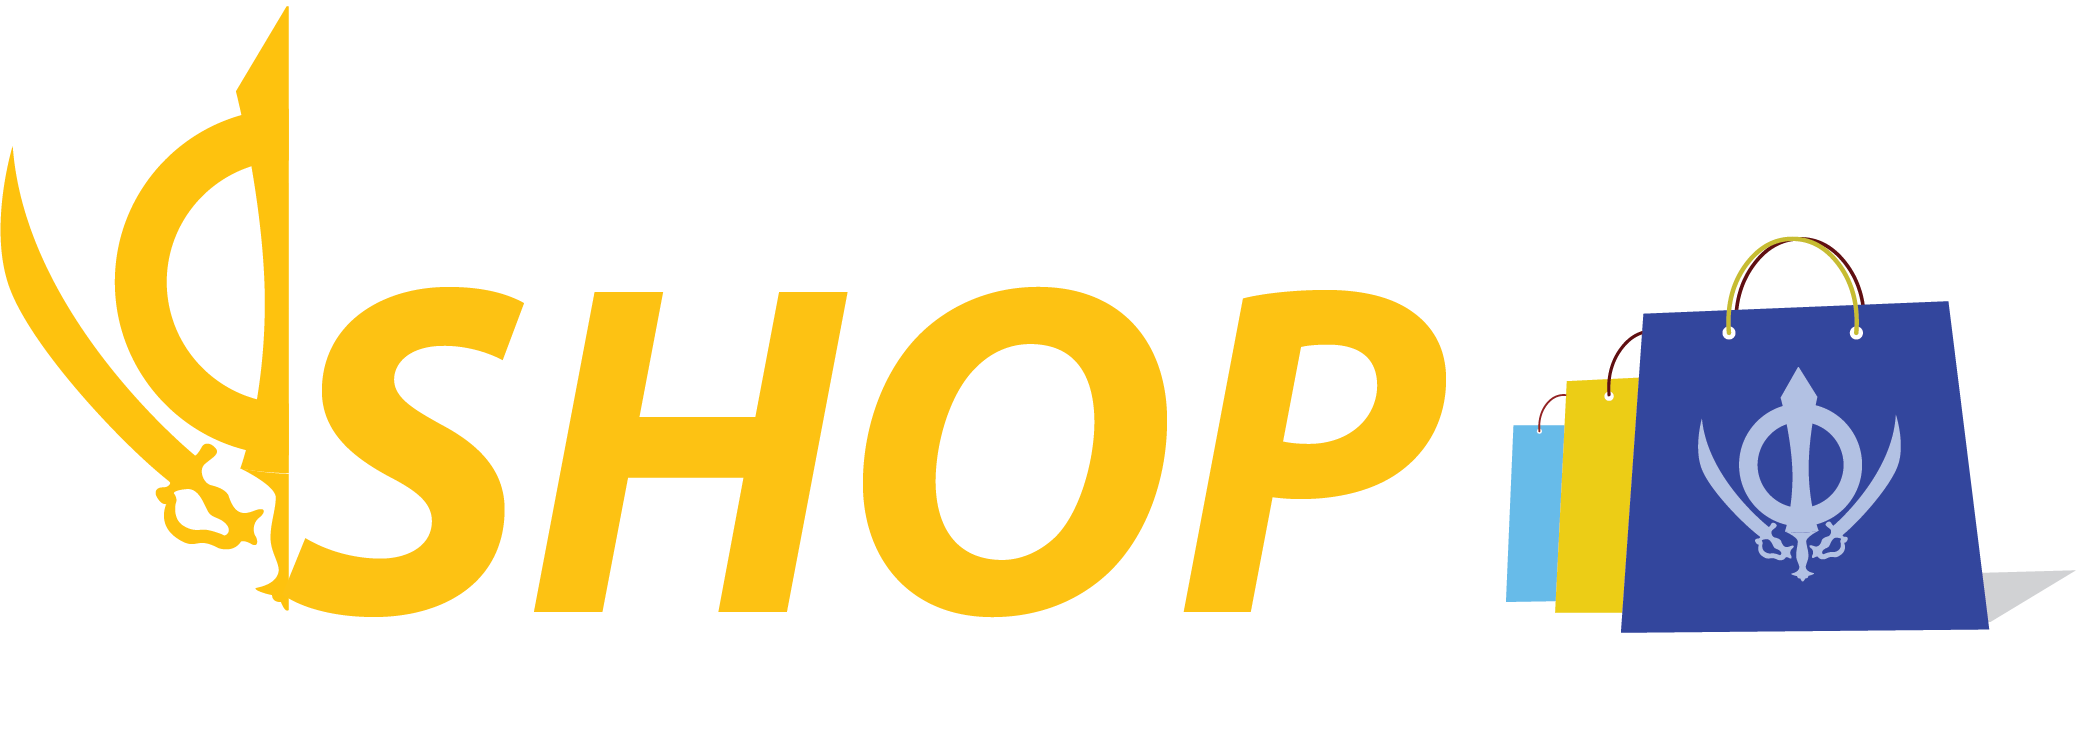 Khalsa Shop